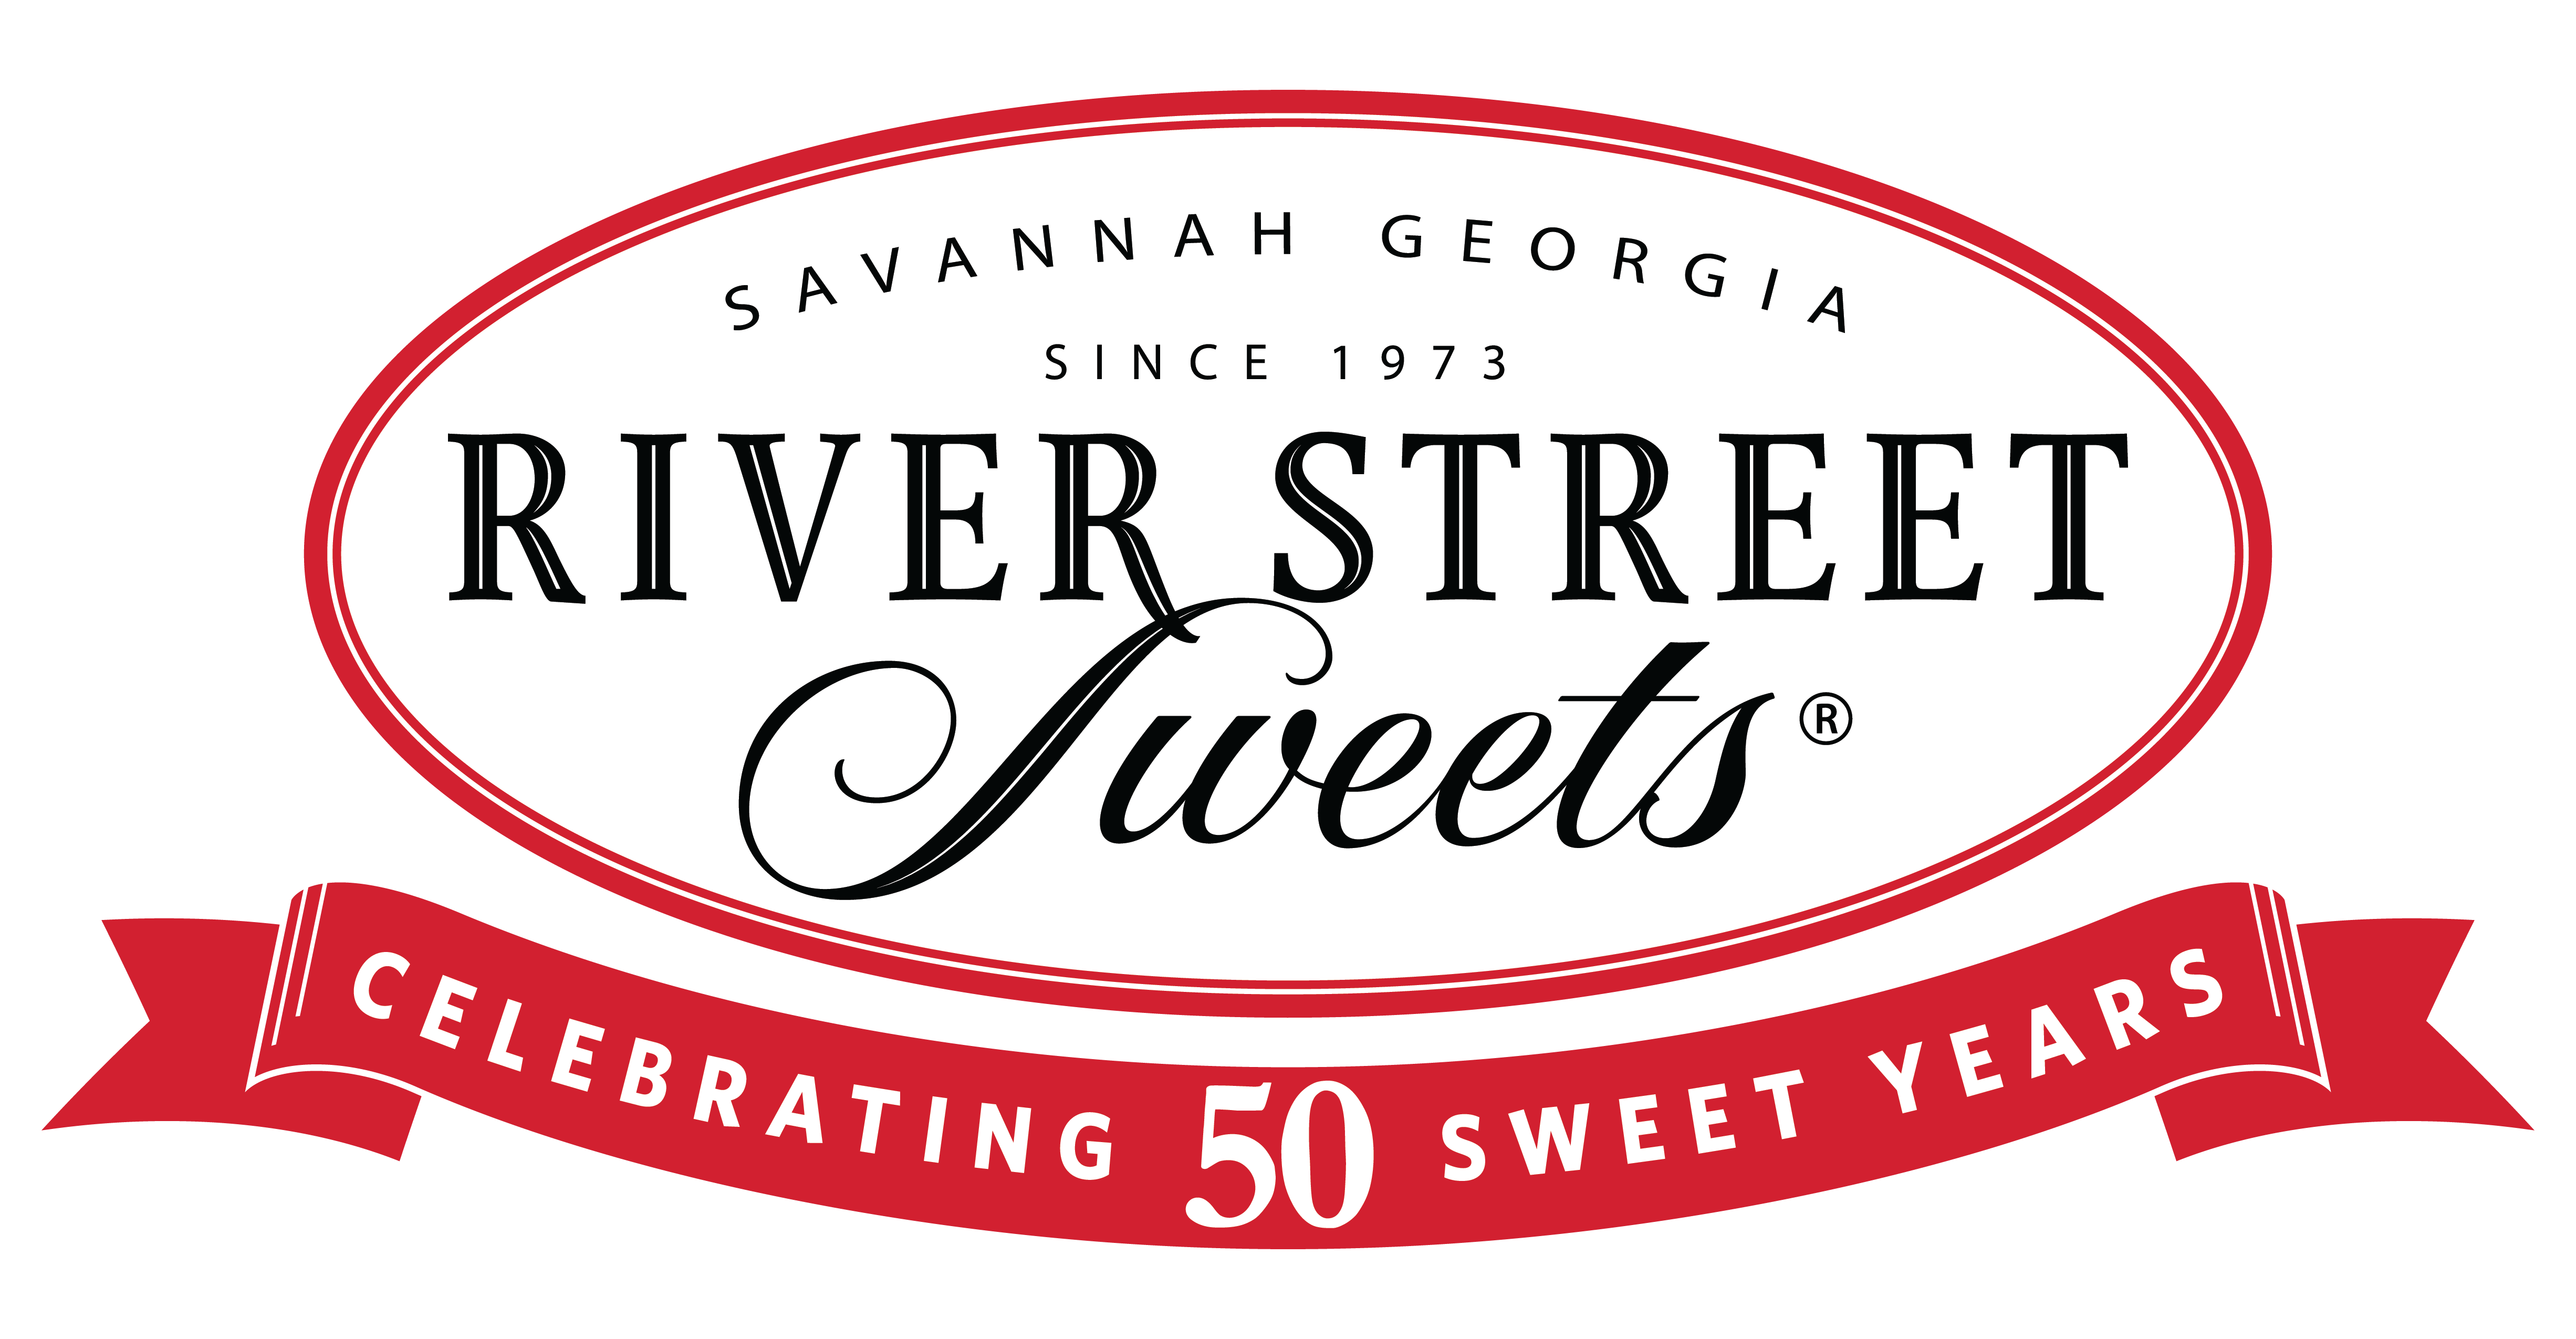 River Street Sweets®®: Celebrating 50 Sweet Years Since 1973 Savannah Georgia logo